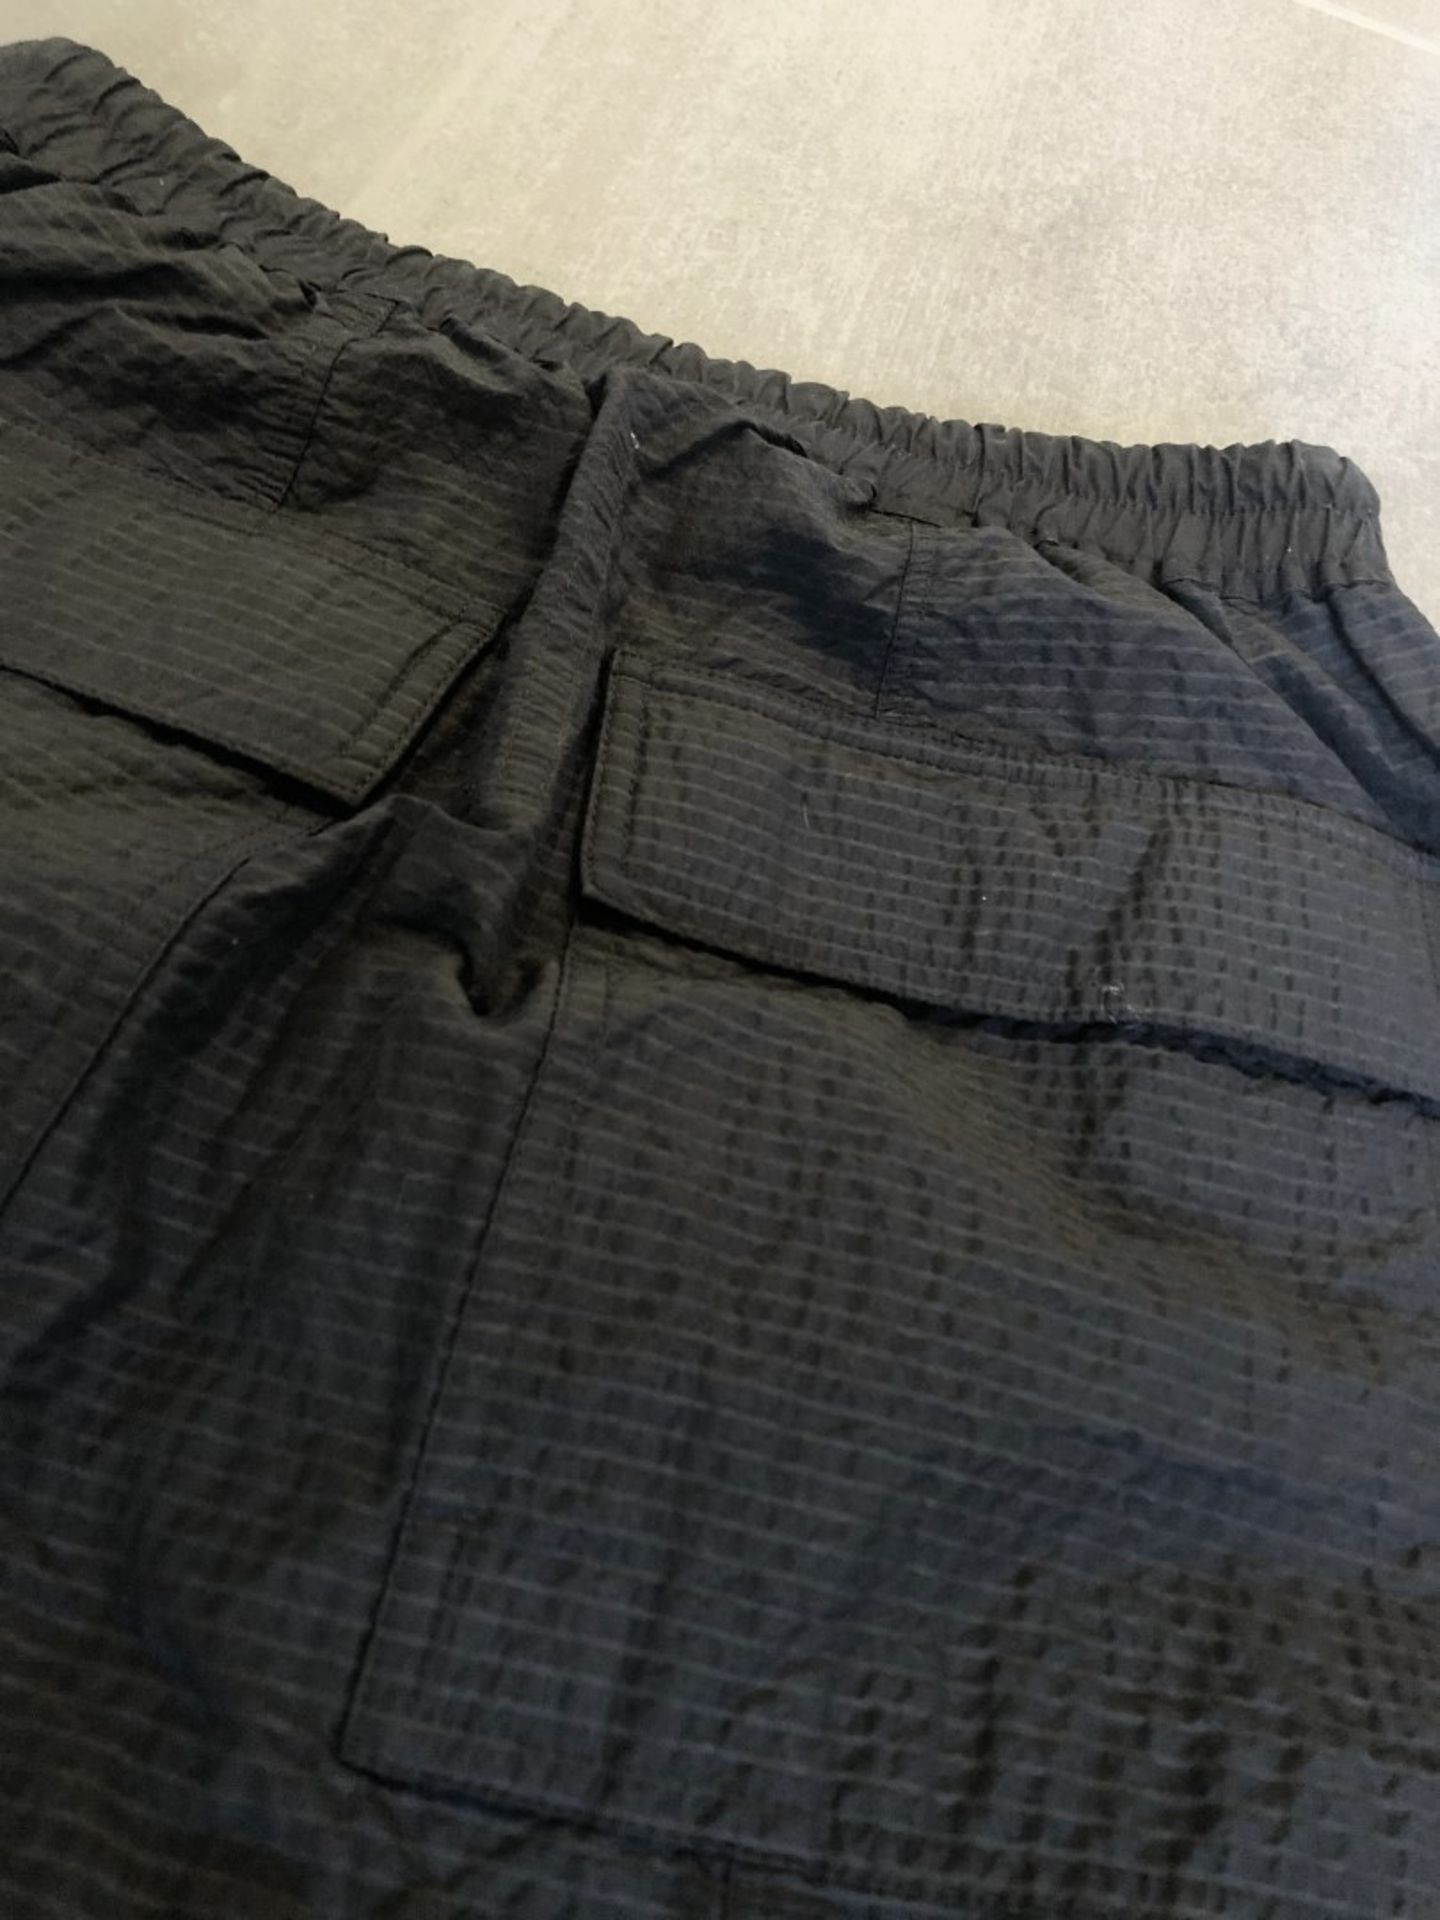 1 x Pair Of Men's Genuine Rick Owens 'Babel' Drawstring-Waist Wool Jersey Shorts - Italian Made - - Image 4 of 5